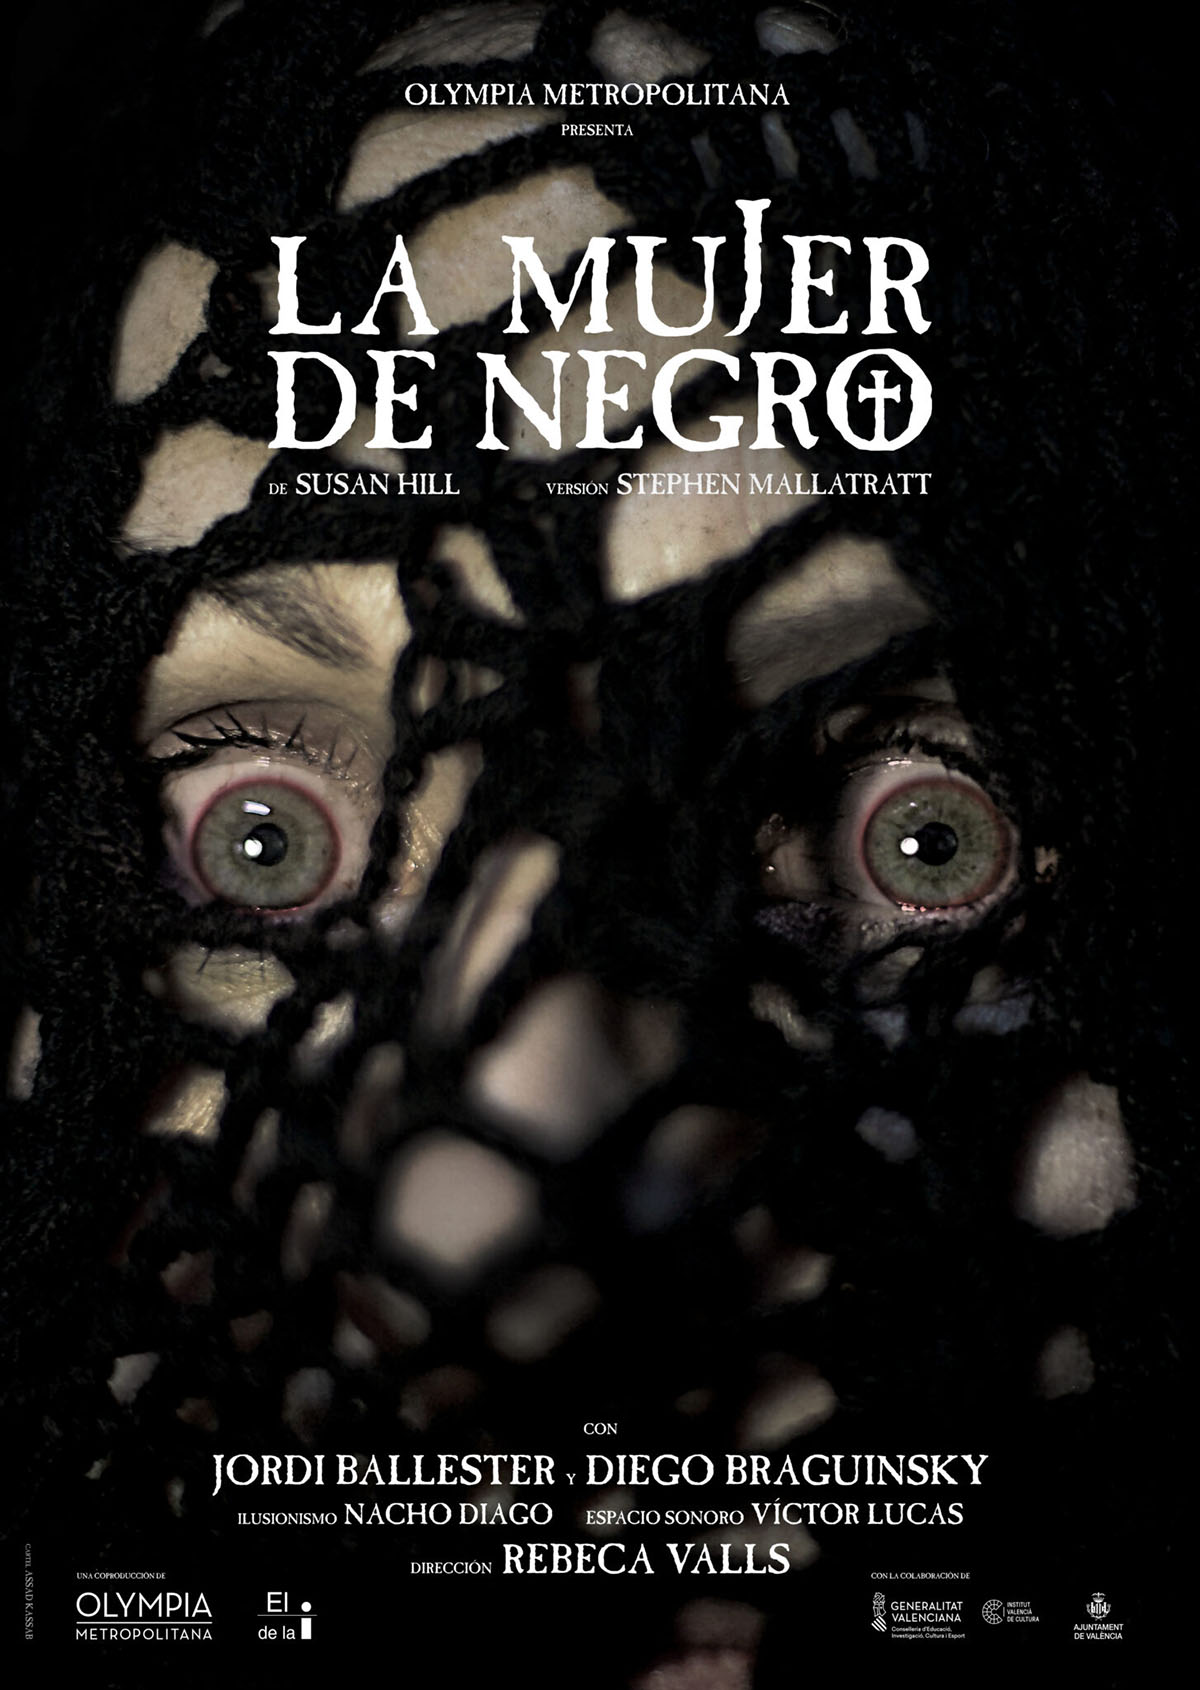 “La mujer de negro” con Jordi Ballester y Diego Braguinski